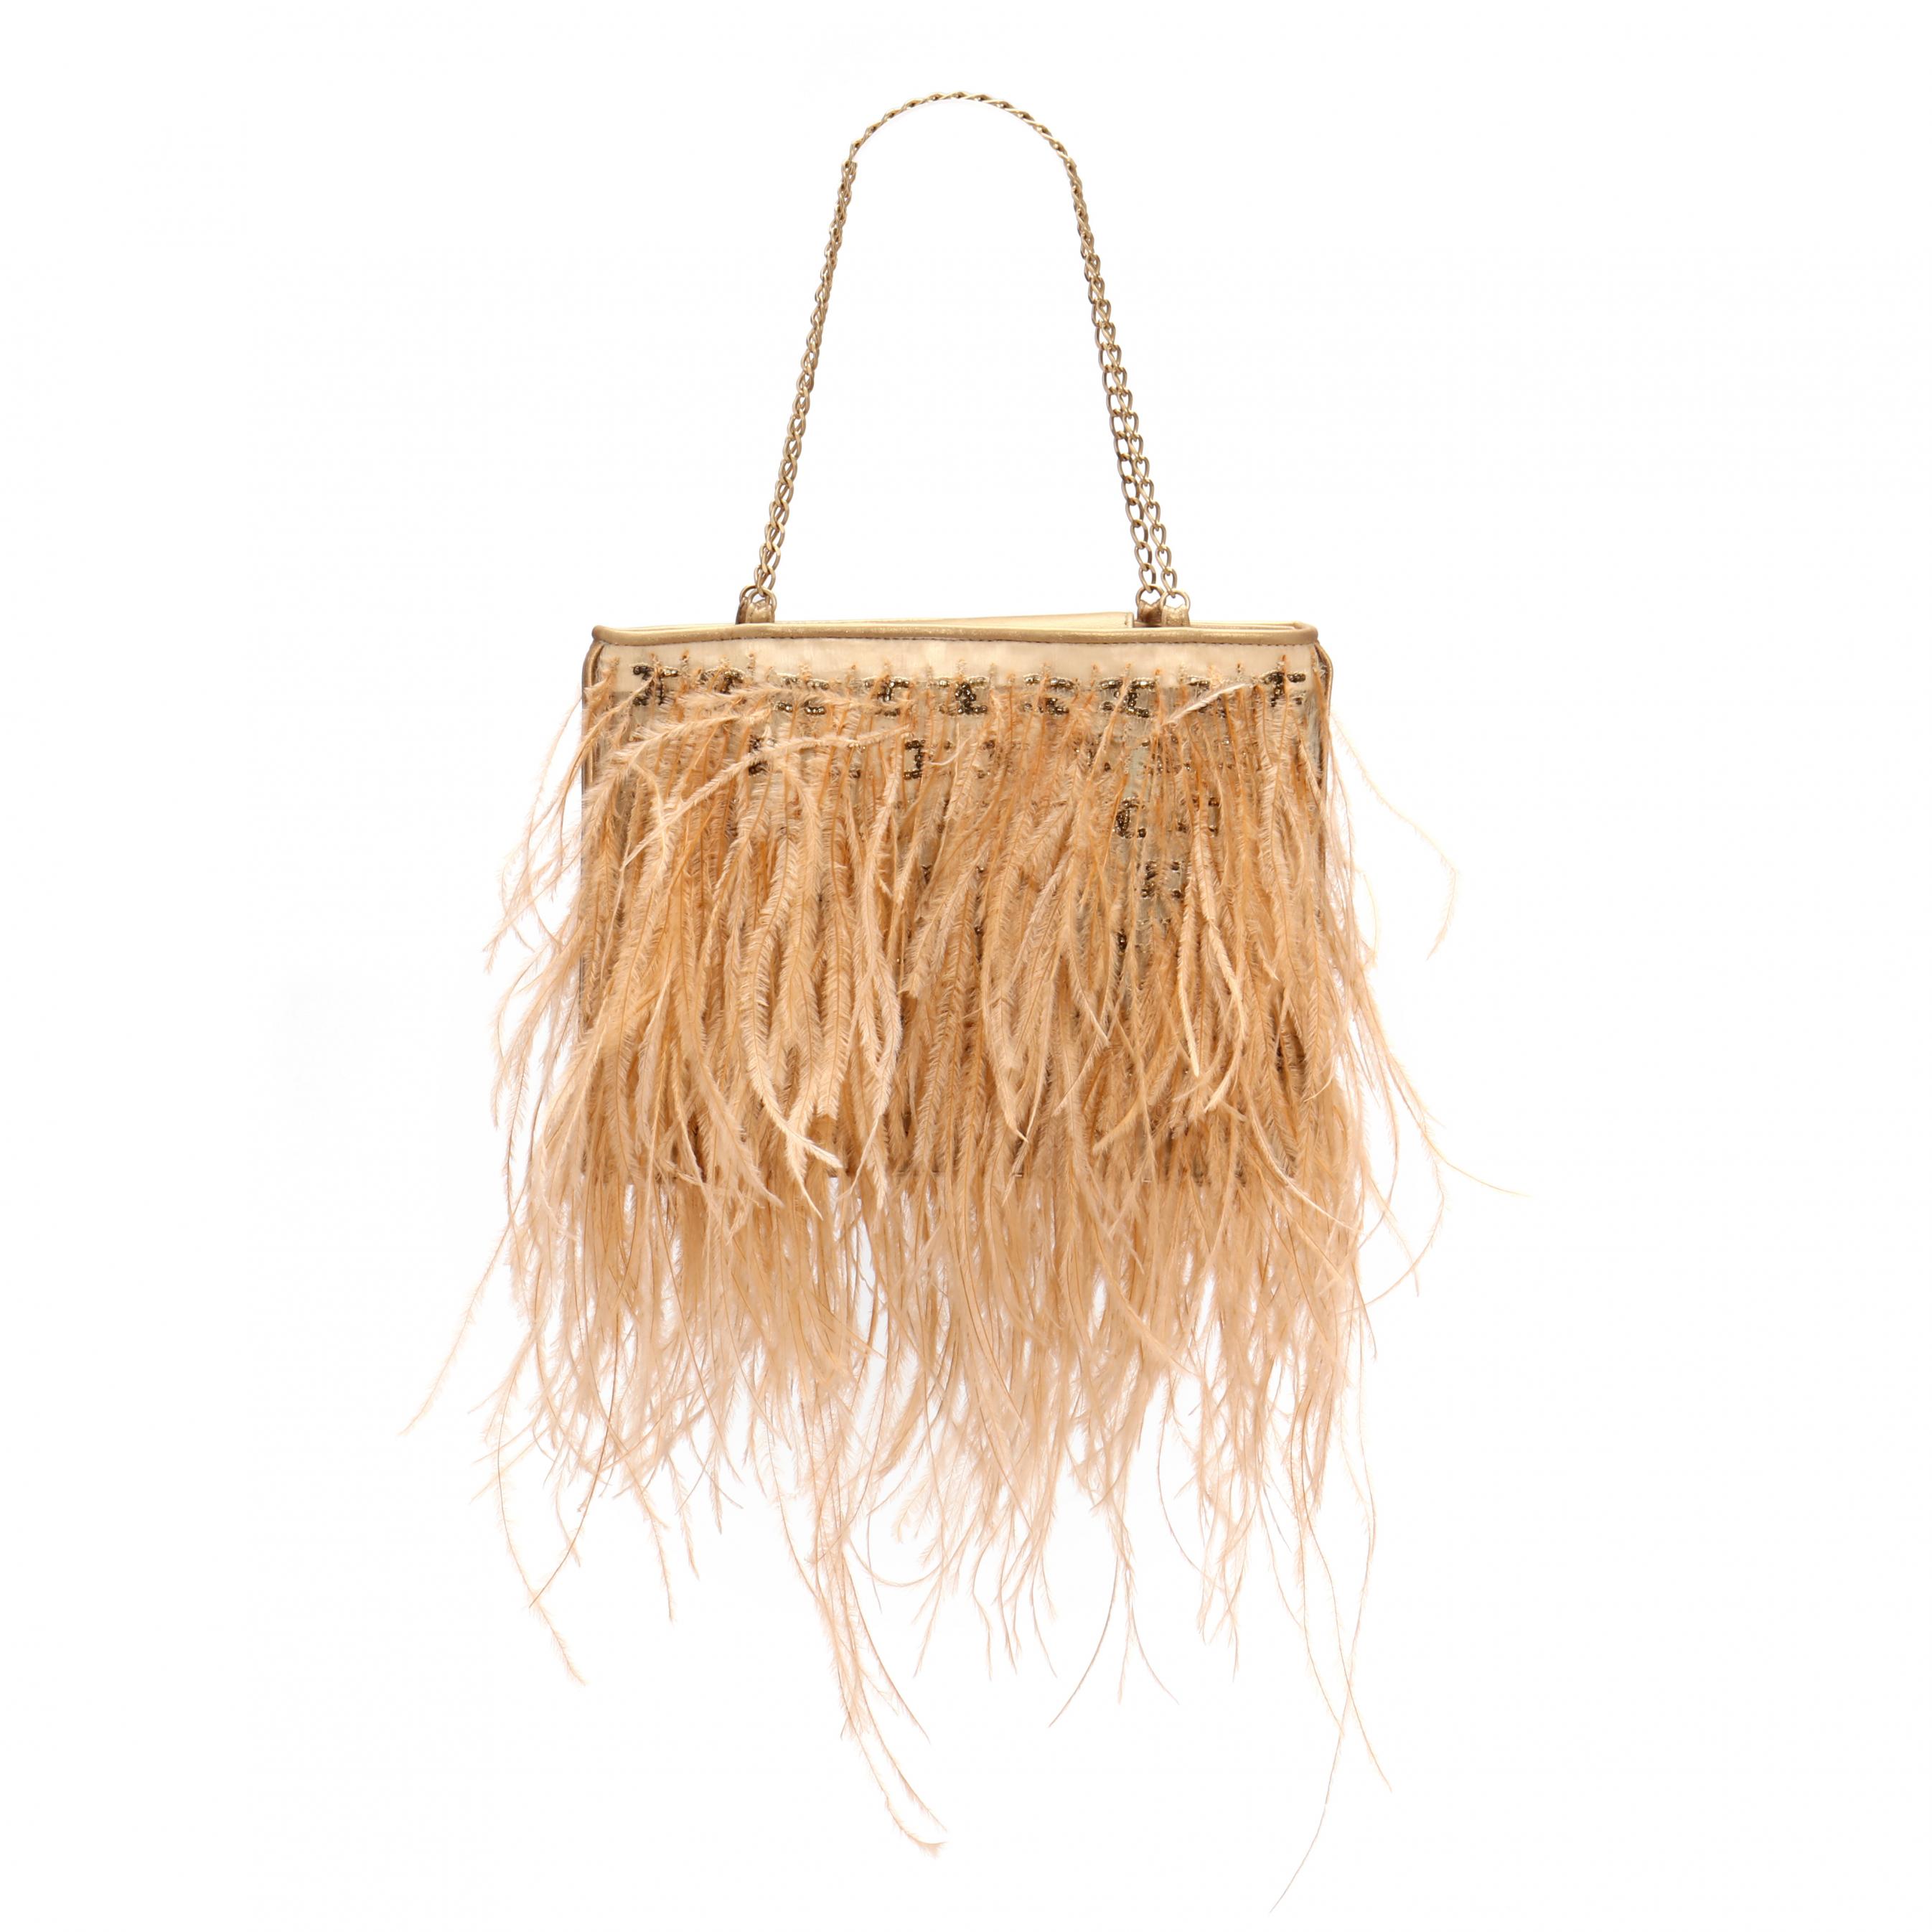 Chanel Chain Strap Shoulder Bag Ostrich Feather